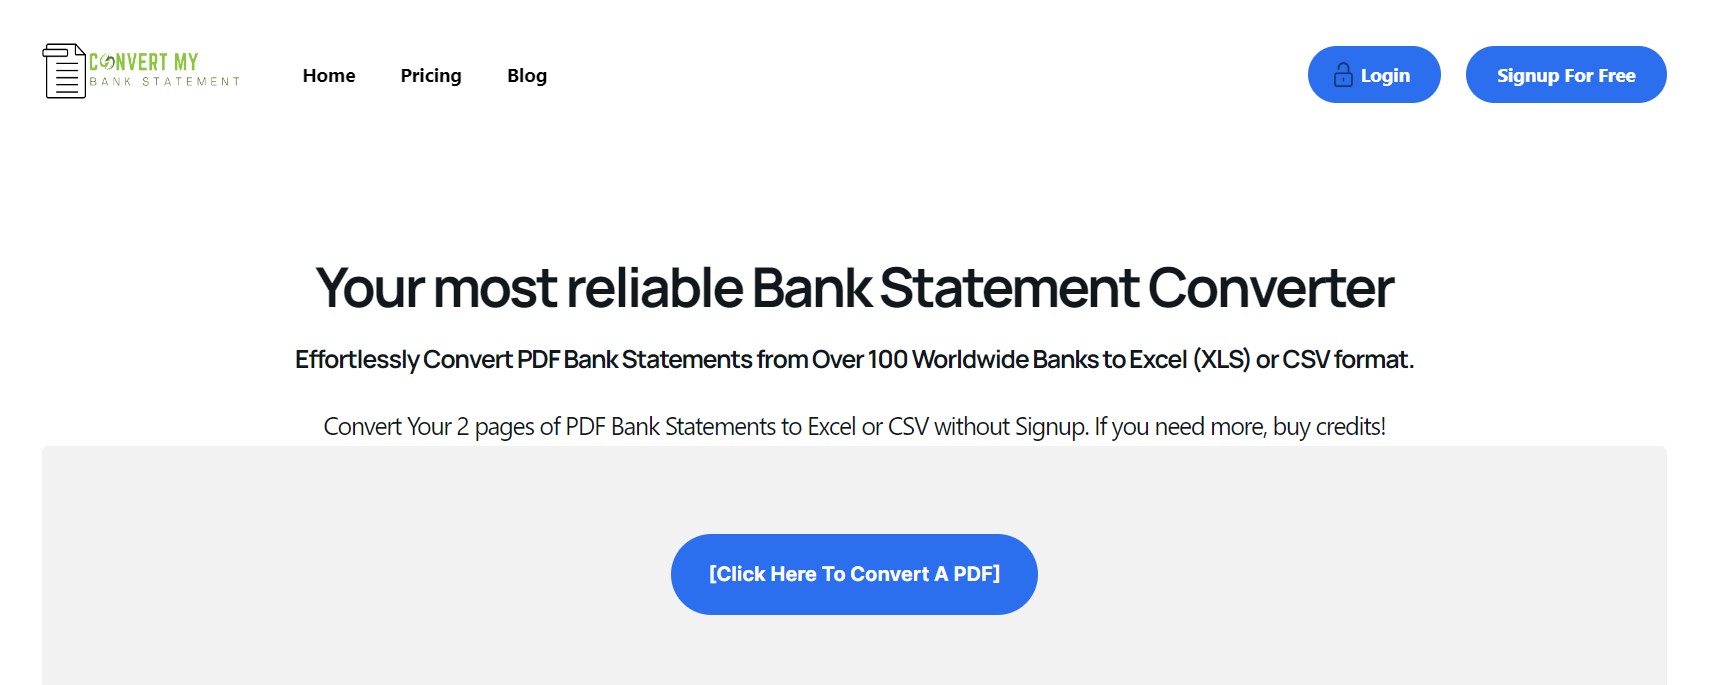 Convert My Bank Statement